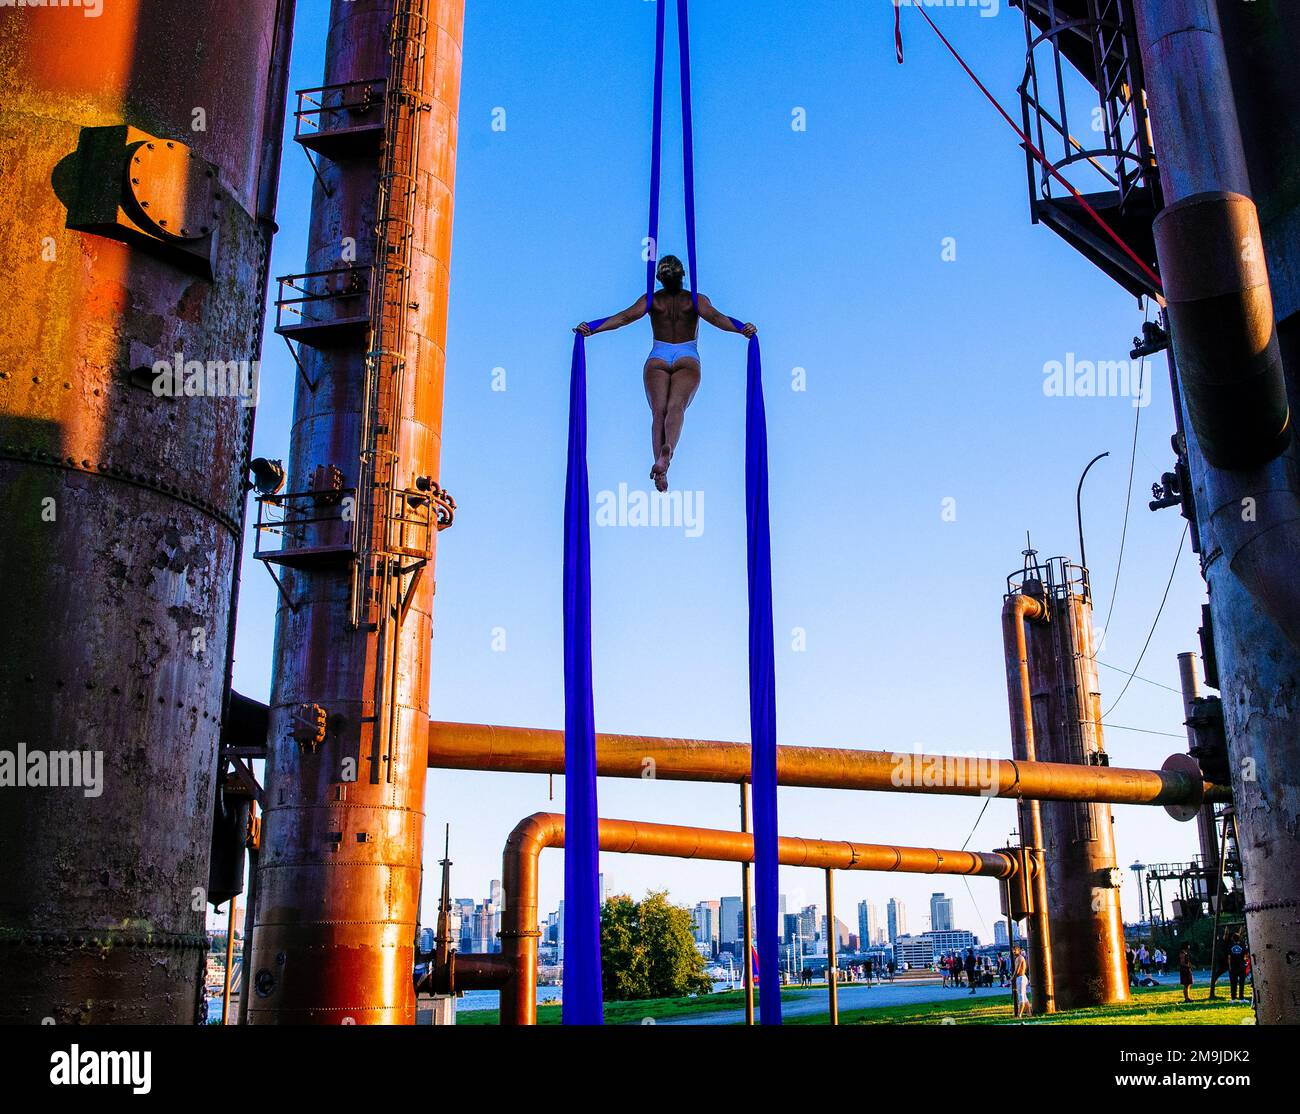 Acrobat on refinery pipes, Bainbridge Island, Washington, USA Stock Photo